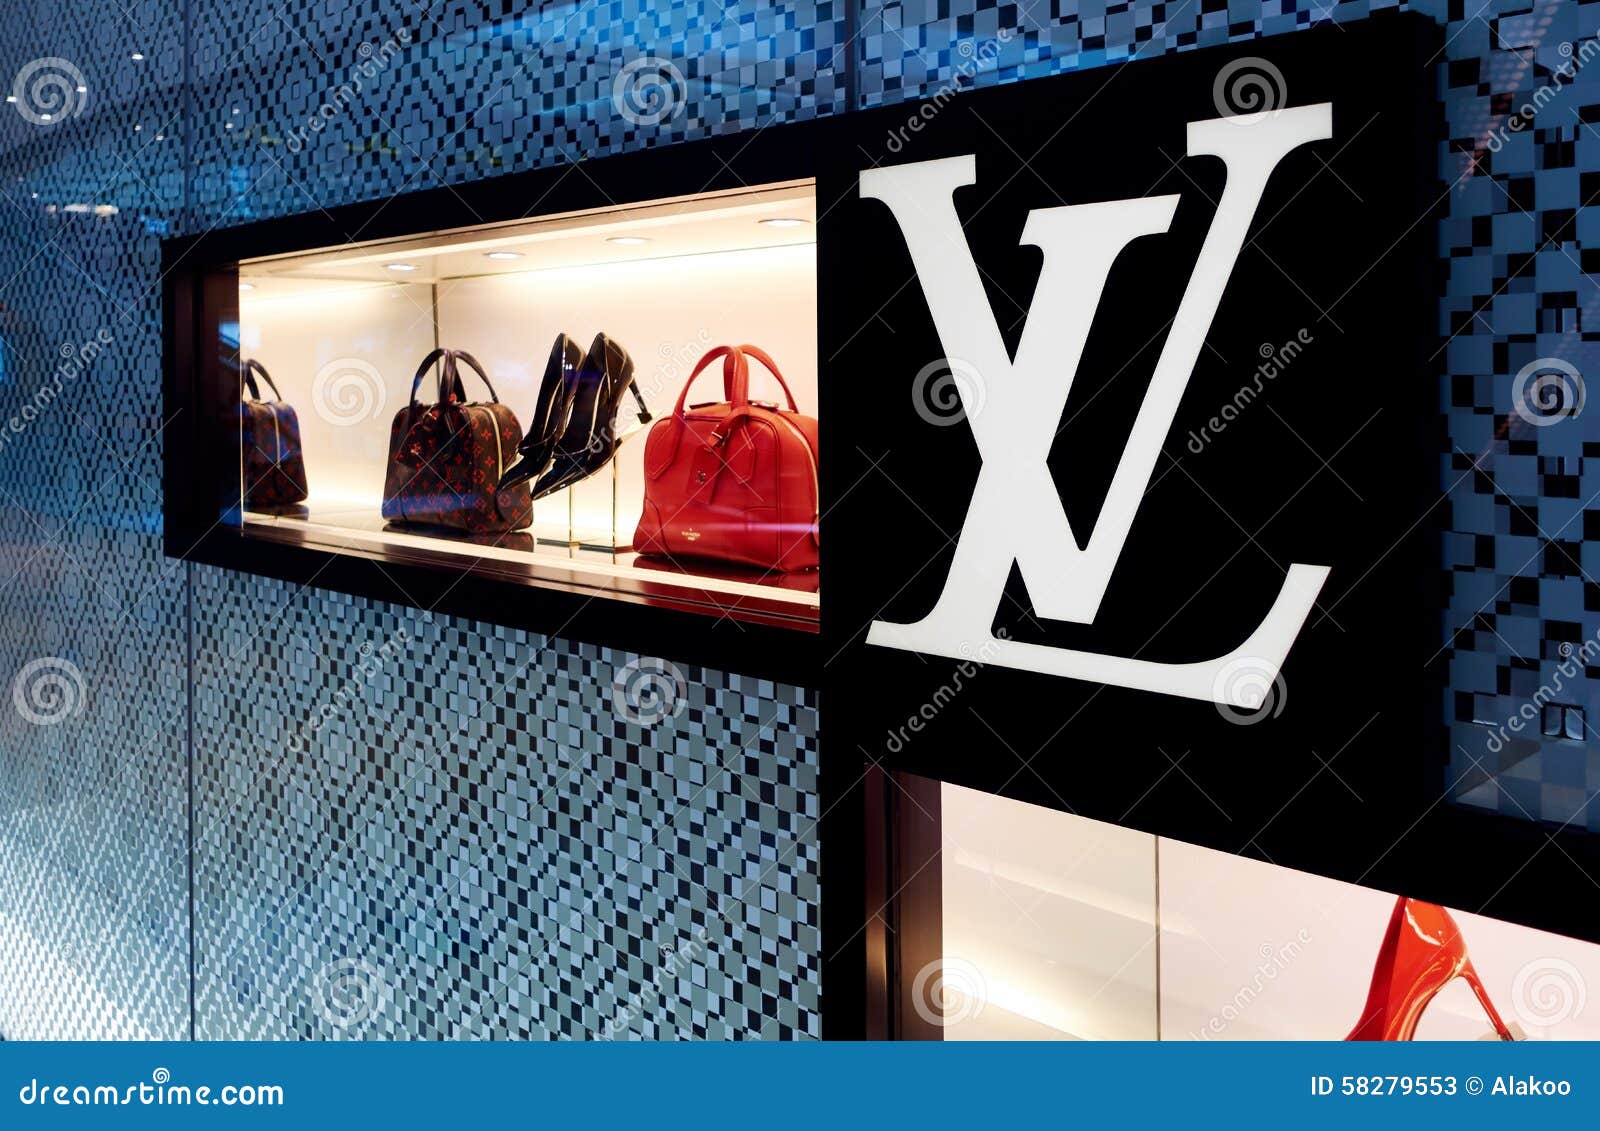 Vuitton Da Vinci Stock Photos - Free & Royalty-Free Stock Photos from  Dreamstime